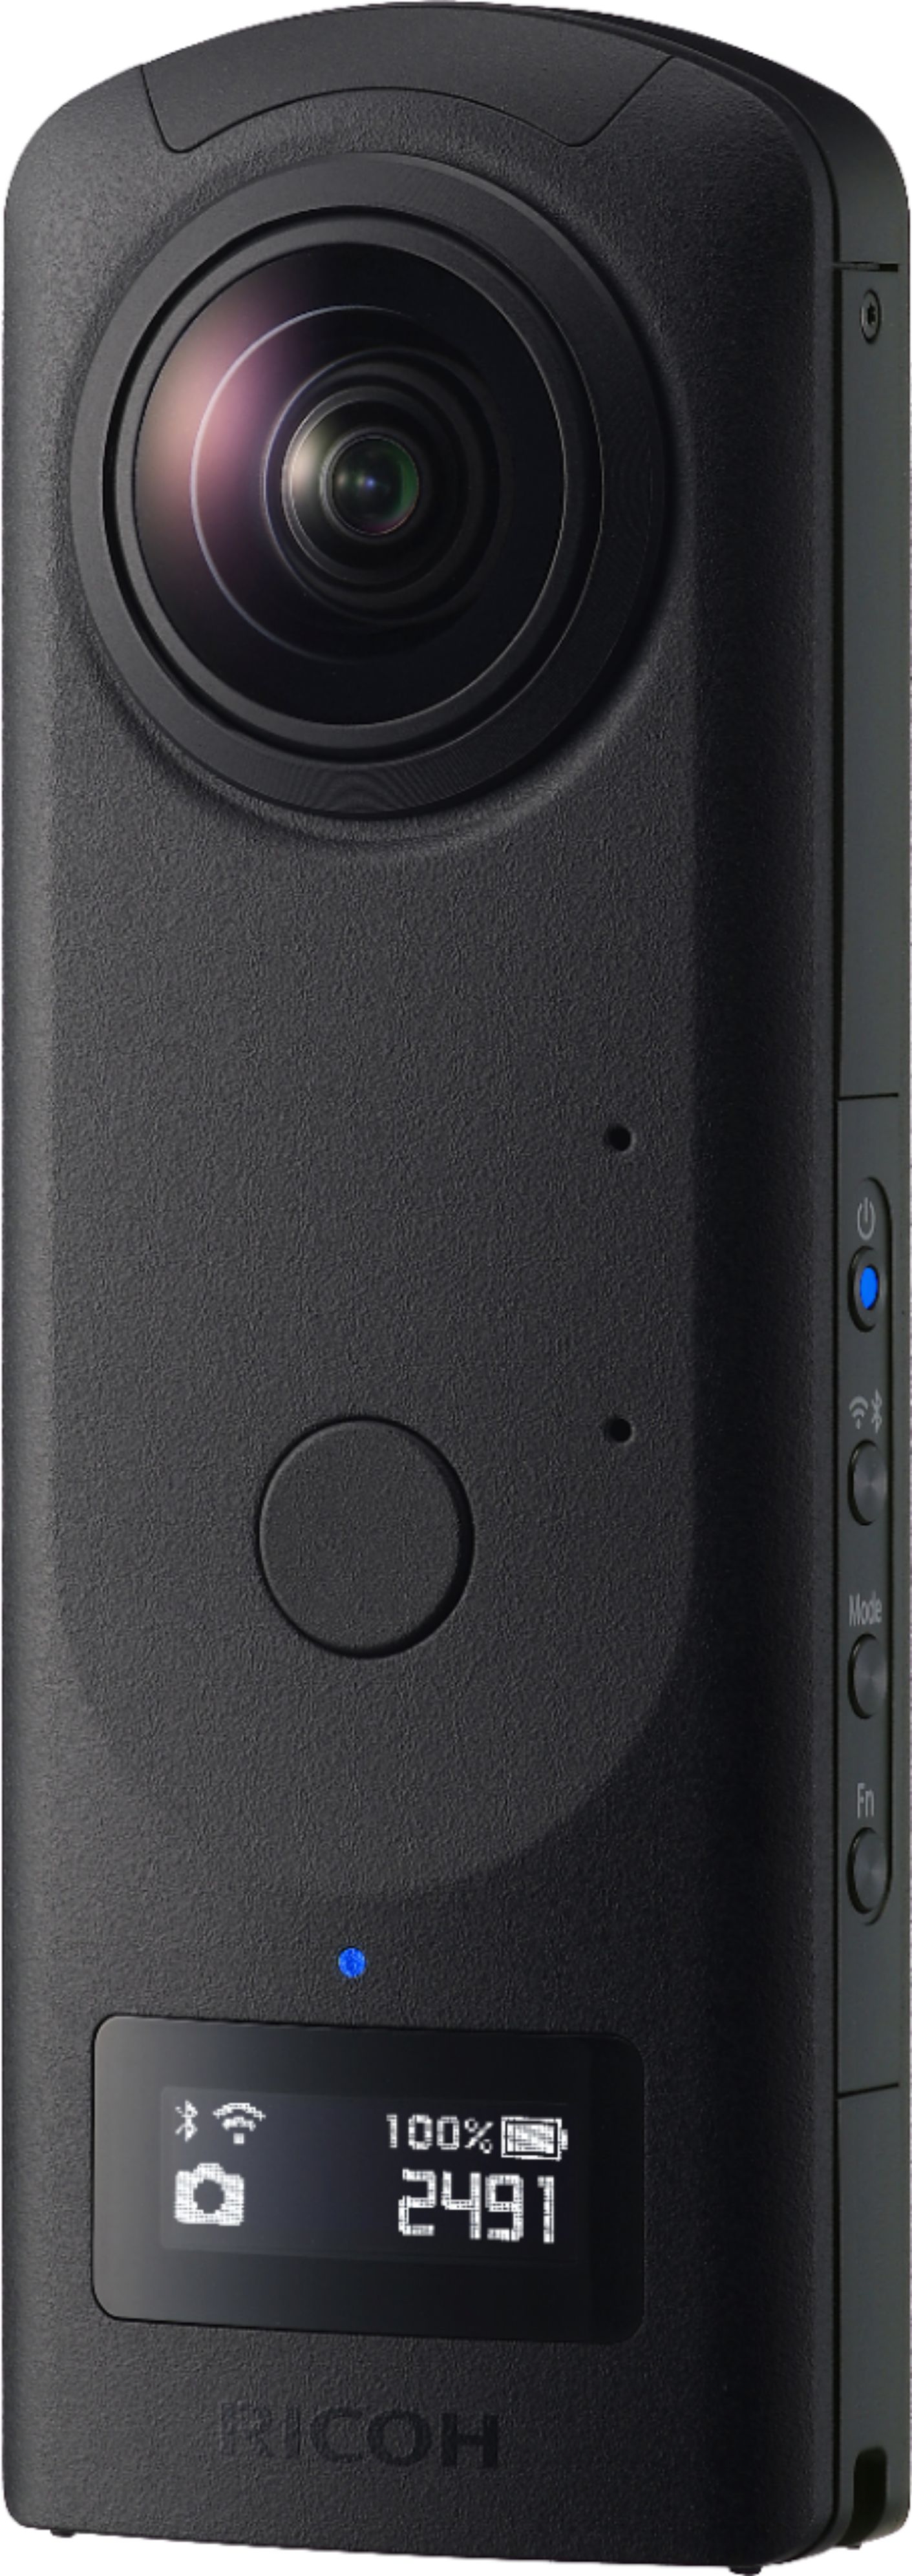 Best Buy: Ricoh Z1 360 Video 23.0 Megapixel Digital Camera Black 910830